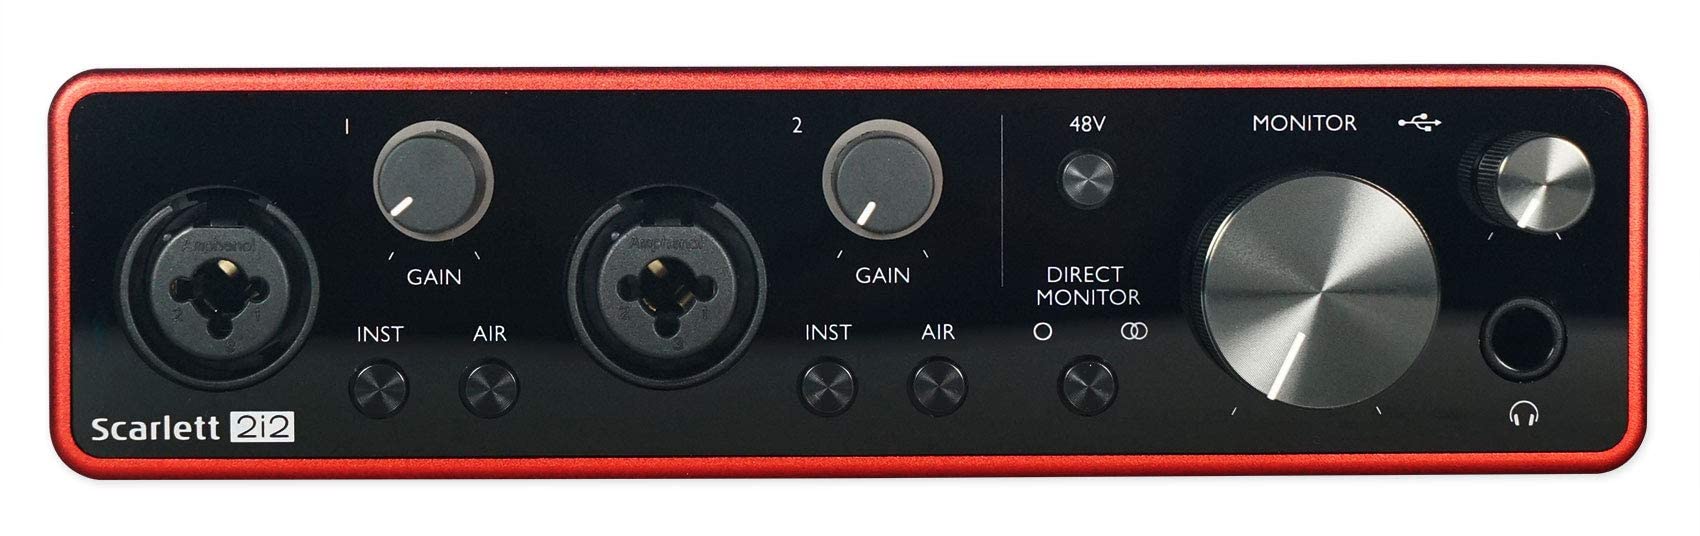 Focusrite Interface audio USB SCARLETT 2I2 3ème génération 192KHz avec Pro Tools First